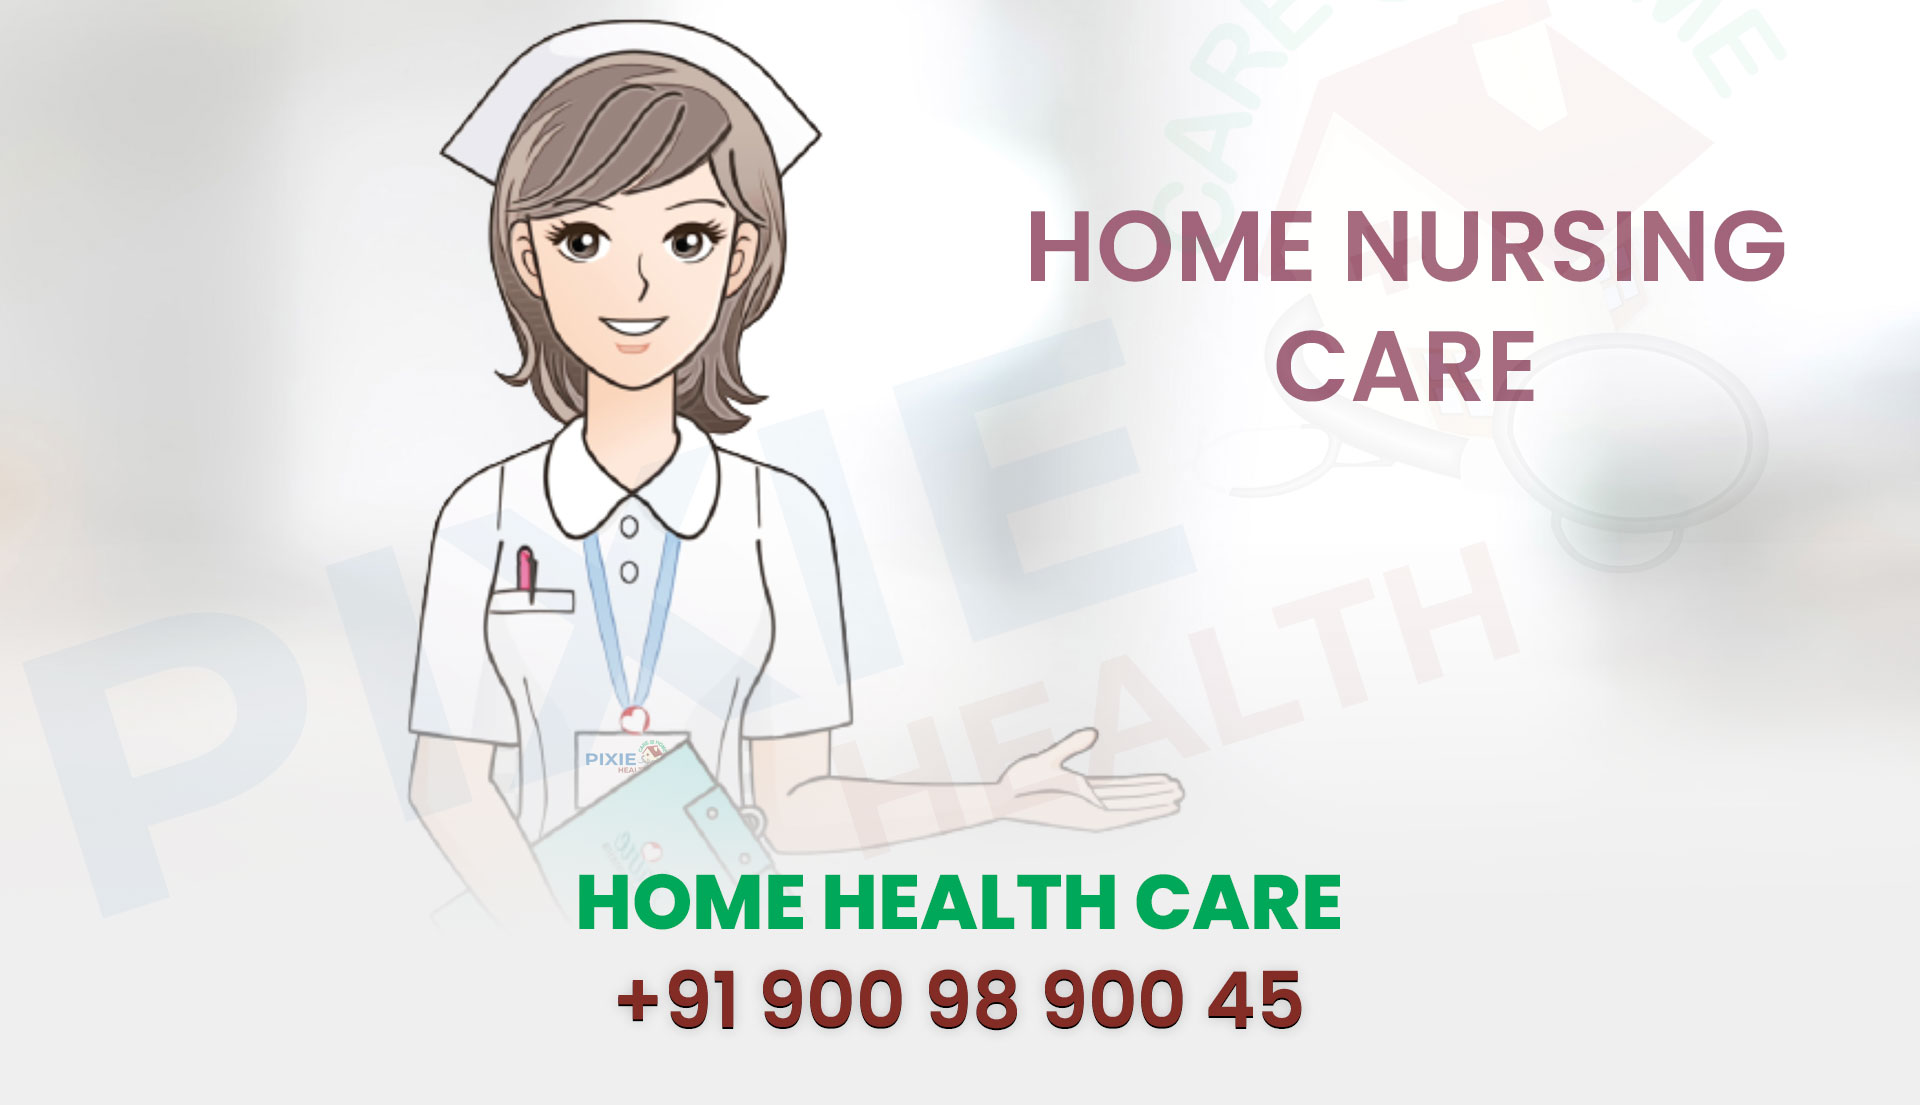 Pixie Health Care - Home Nursing Care